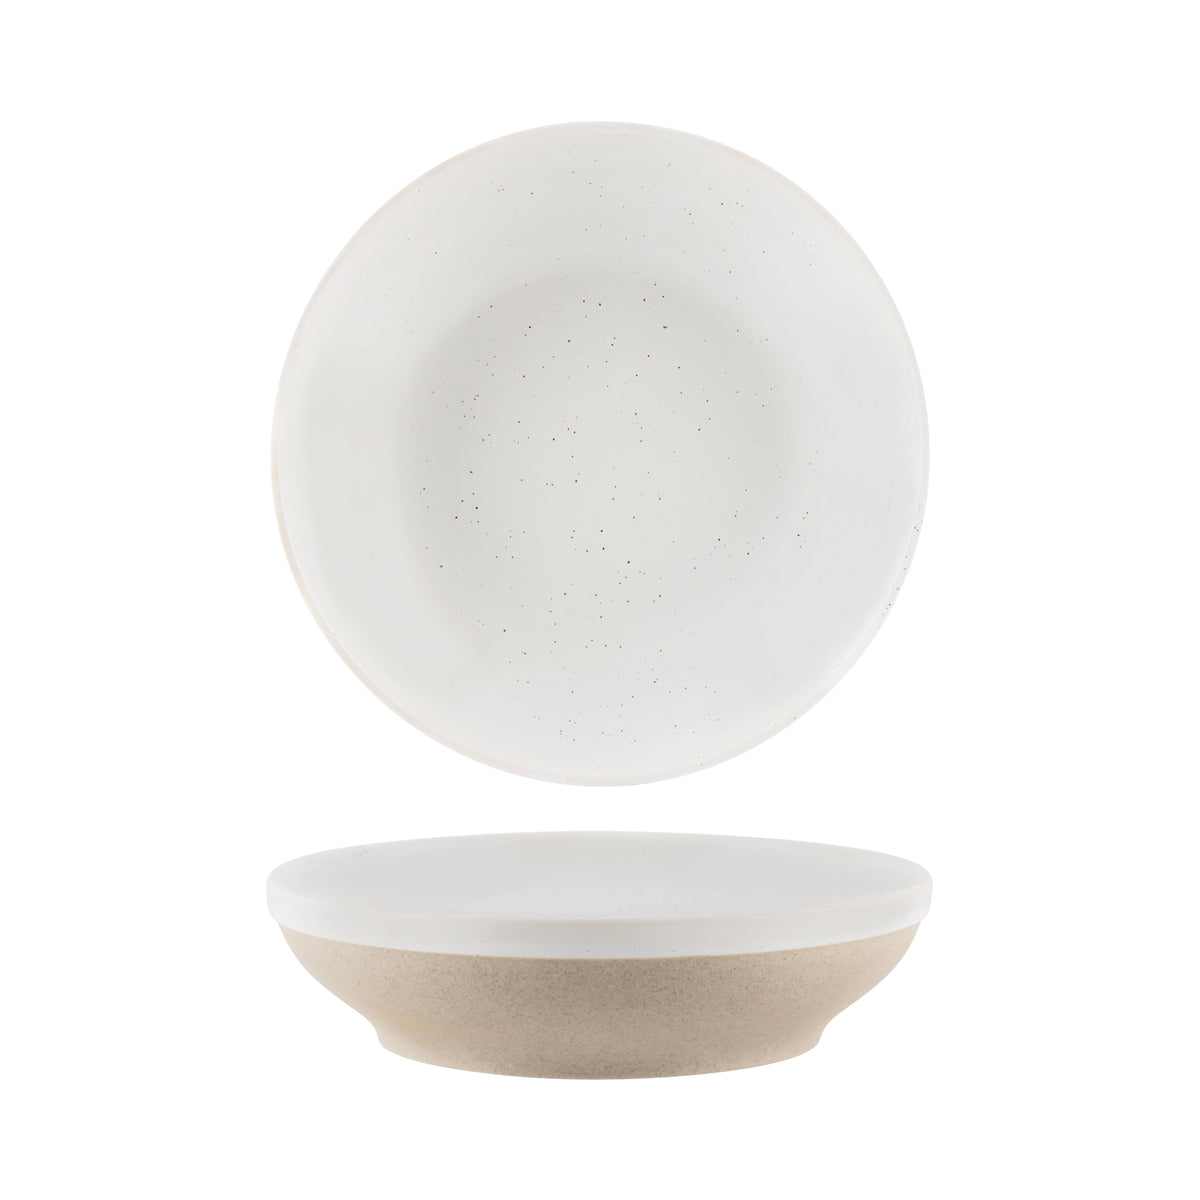 908515 Tablekraft Soho White Pebble Flared Bowl 227mm Tomkin Australia Hospitality Supplies